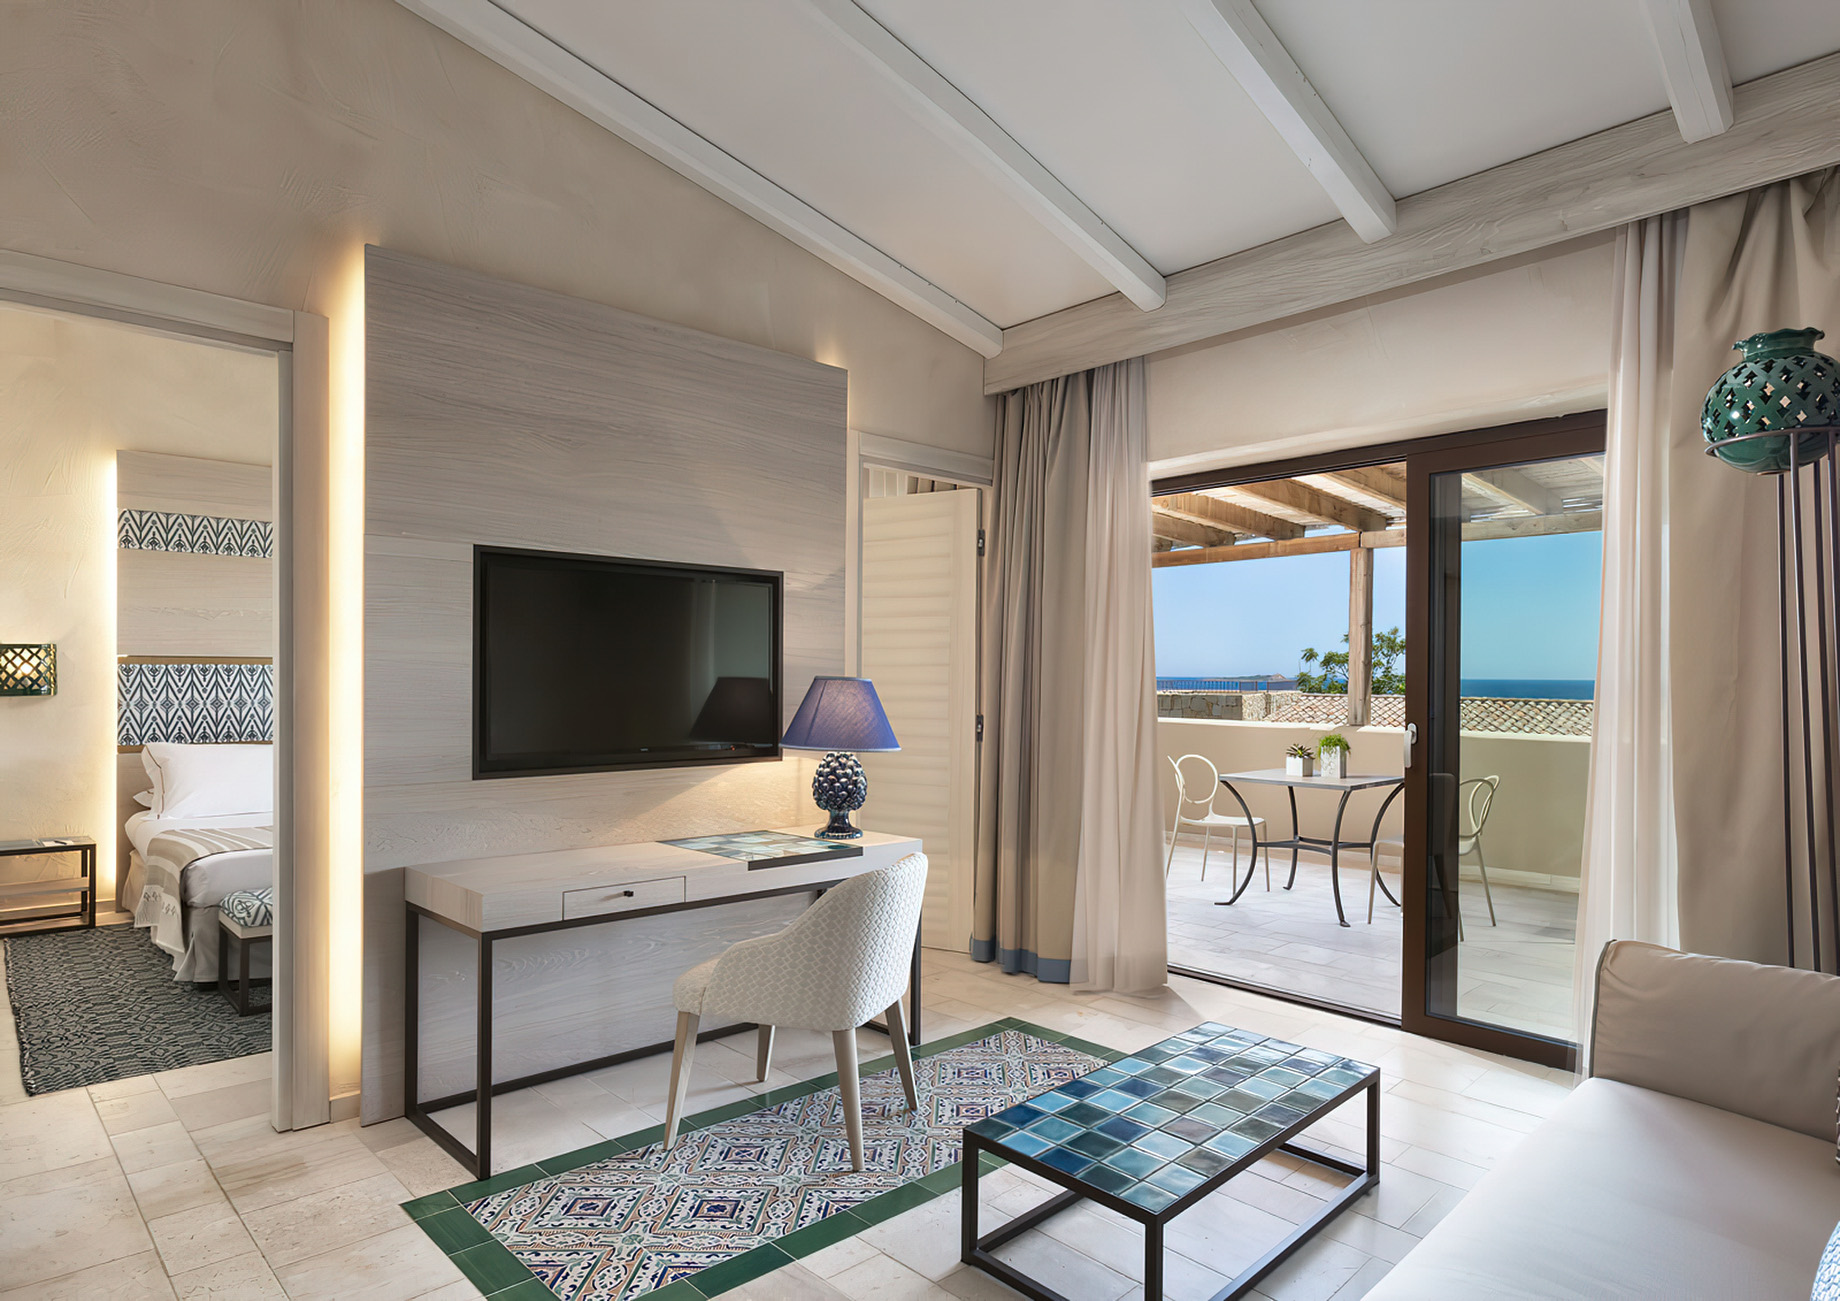 Baglioni Resort Sardinia – San Teodoro, Sardegna, Italy – Sea View Suite Desk